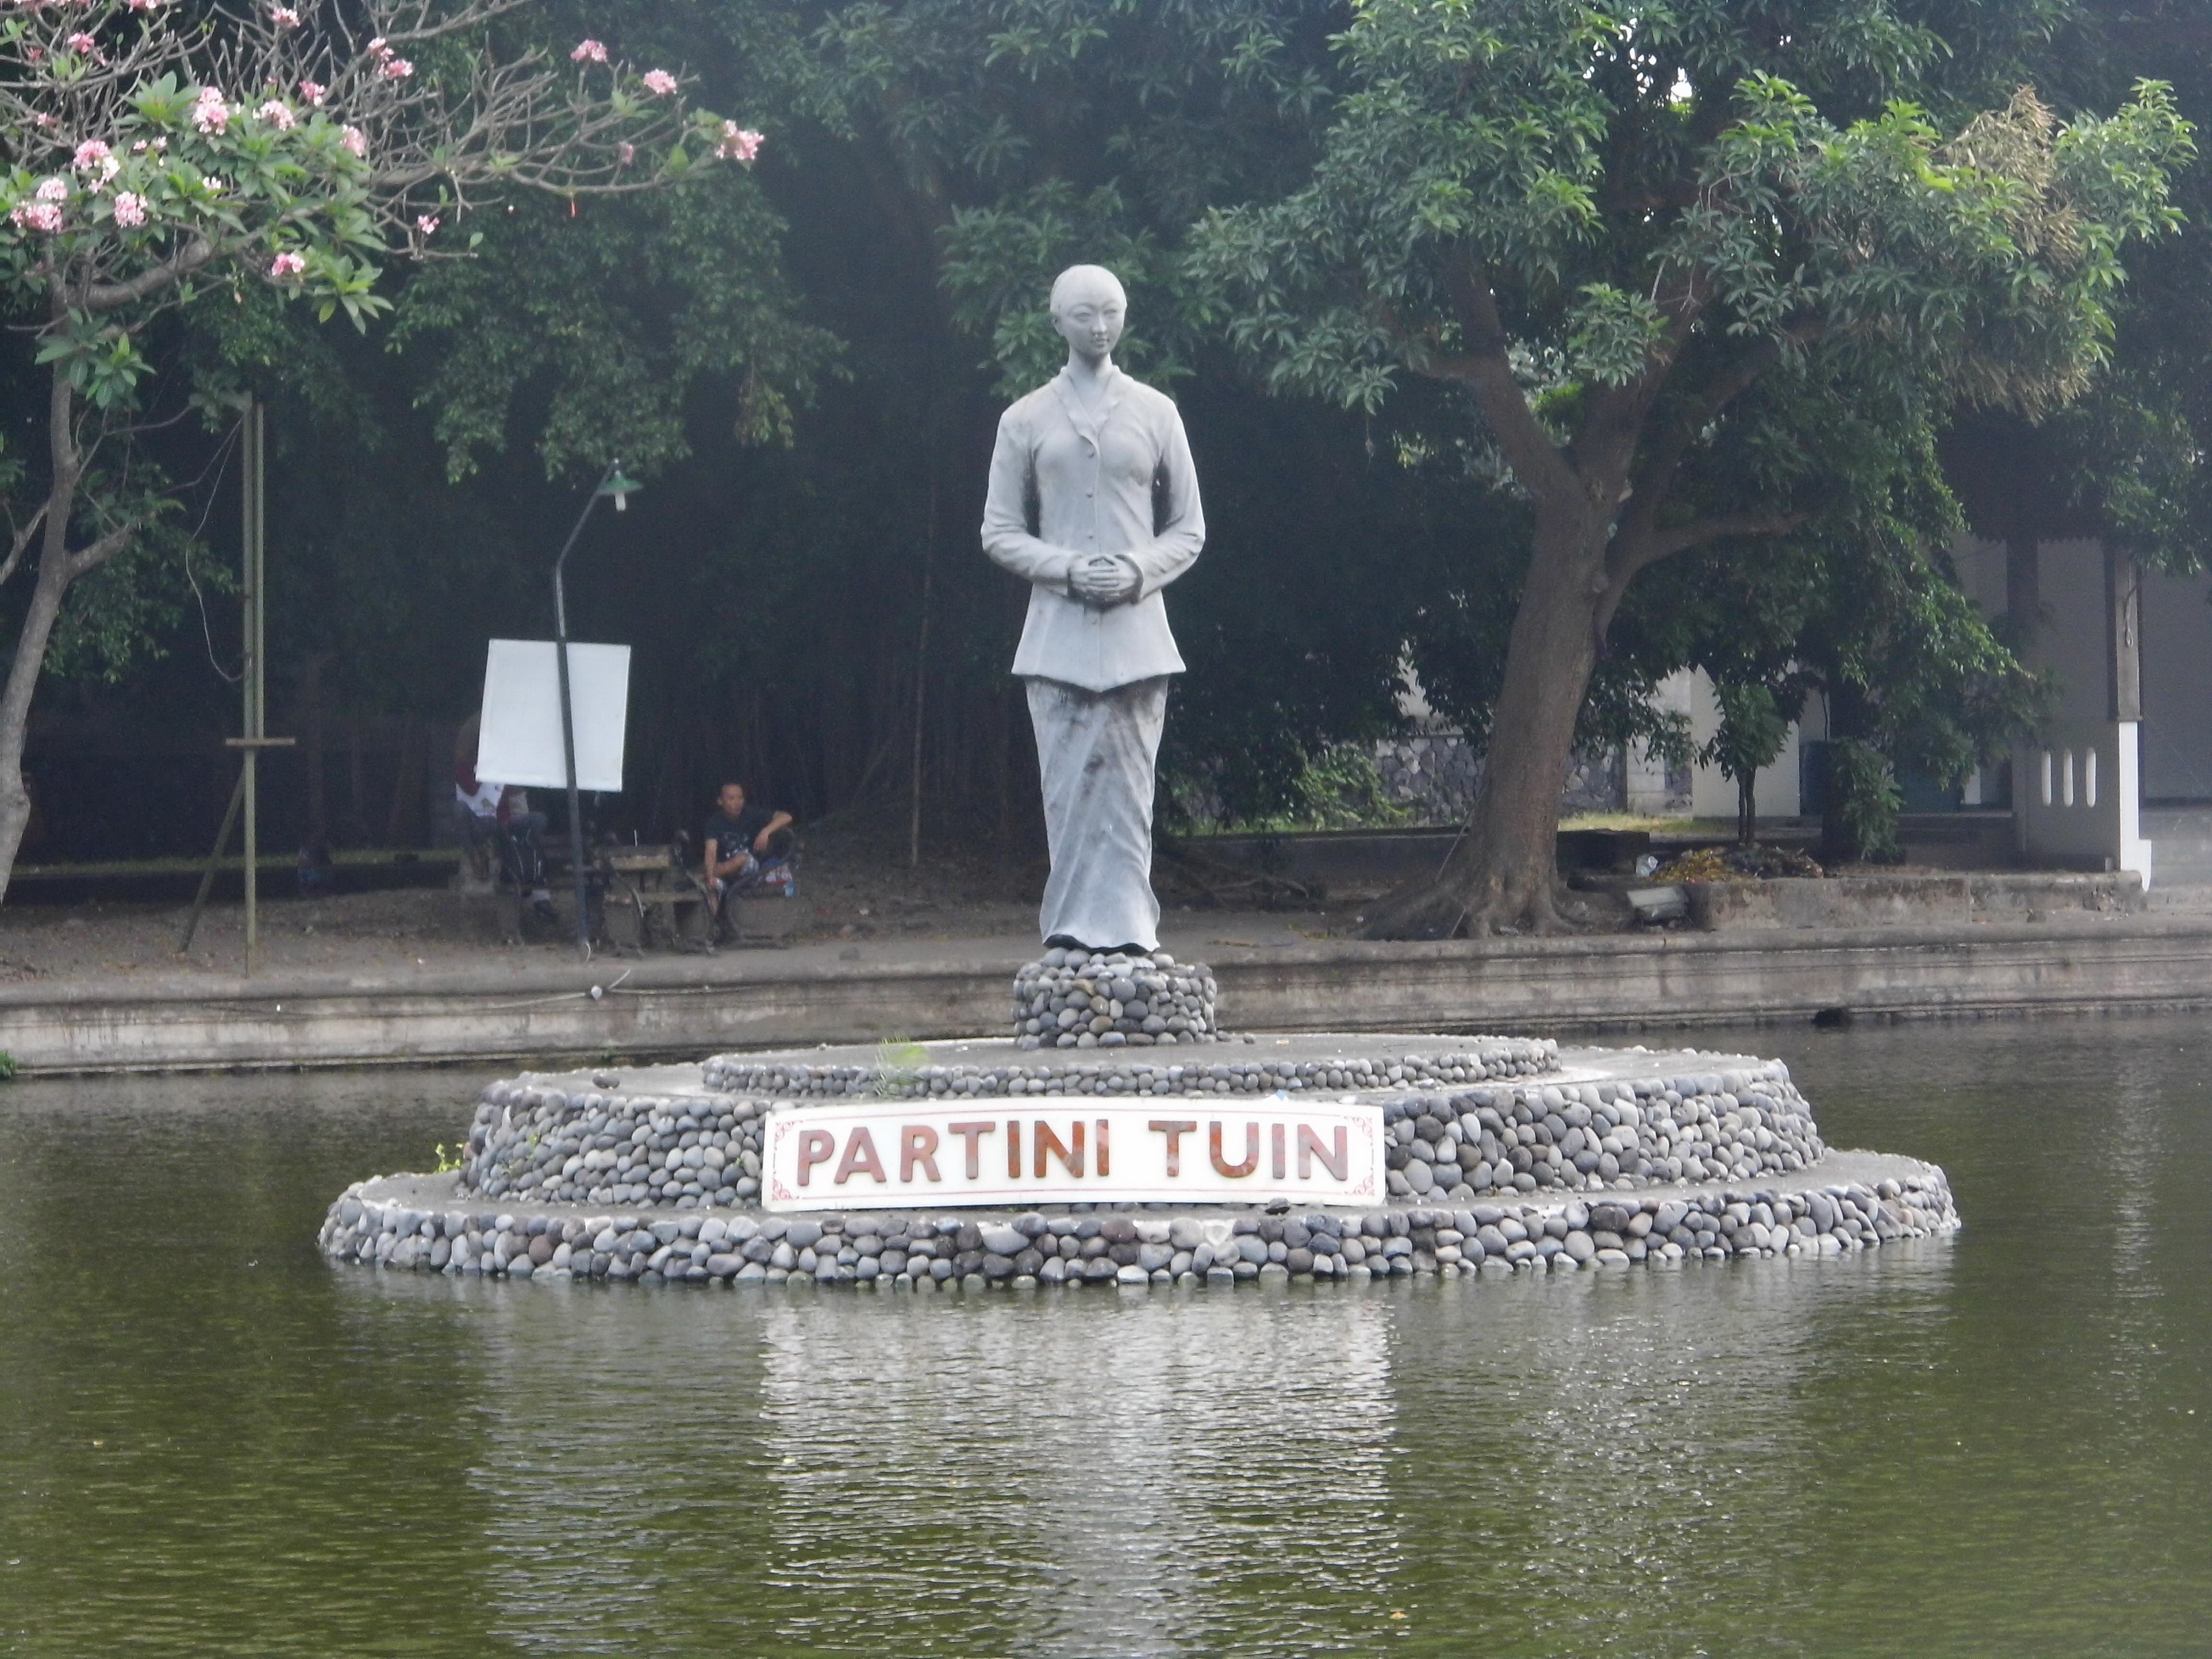 Patung Parti Tuin (C) Rizky Nusantara/Travelingyuk